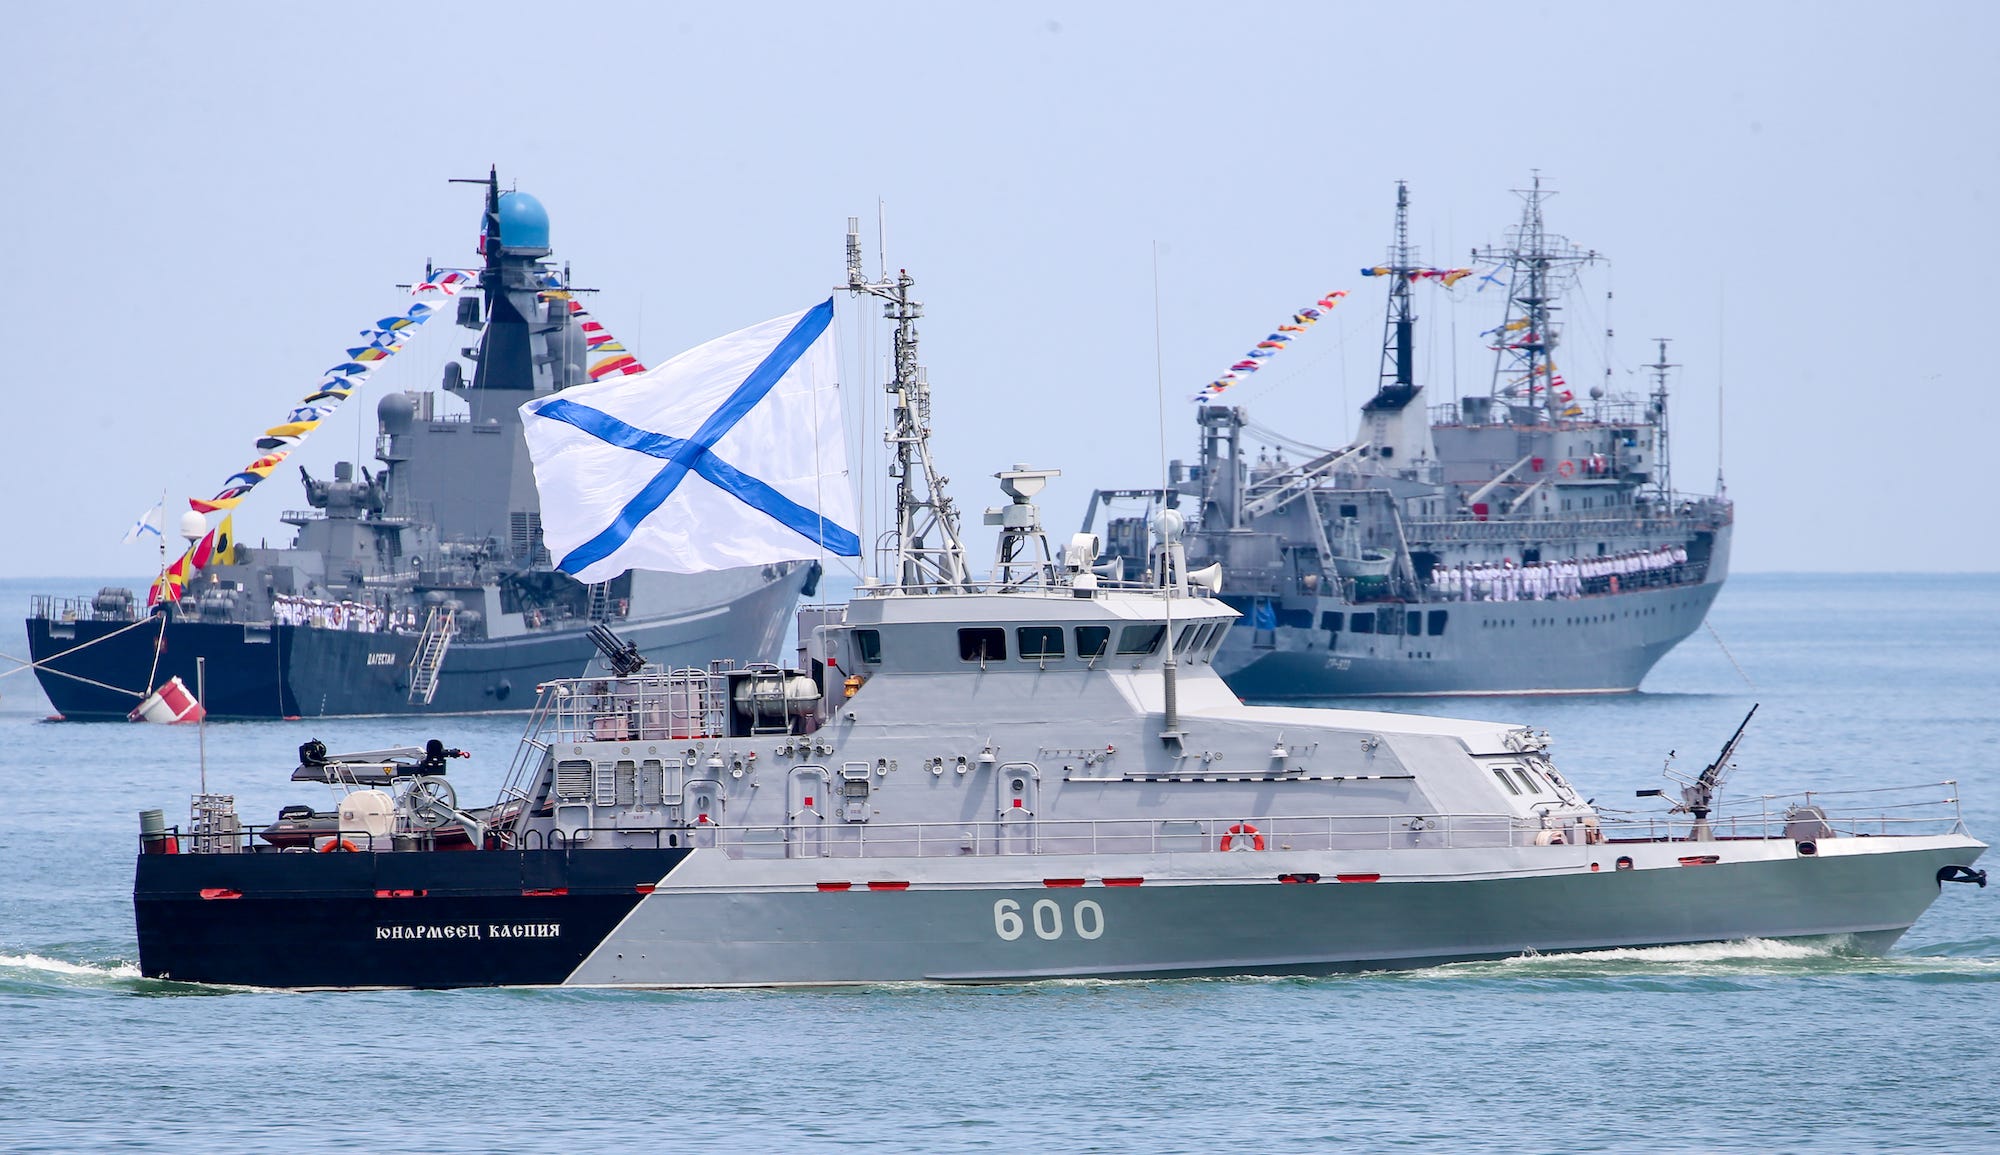 Russian Caspian Sea flotilla ships